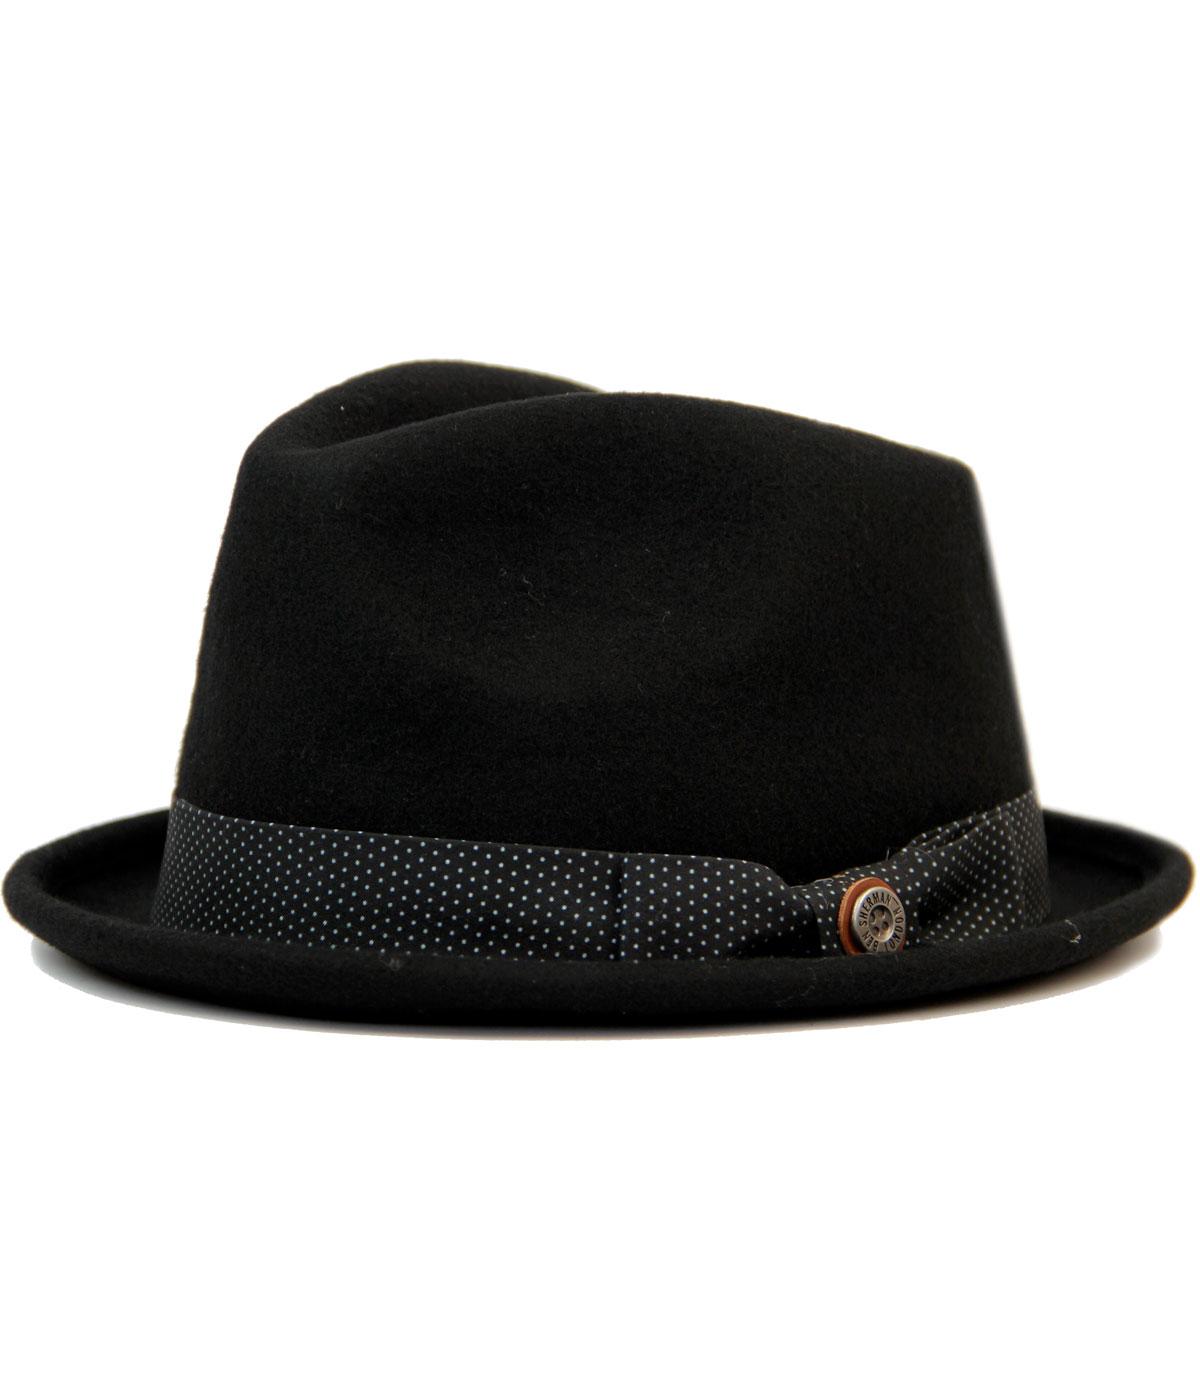 BEN SHERMAN 60s Mod Trilby Hat with Pin Dot Band